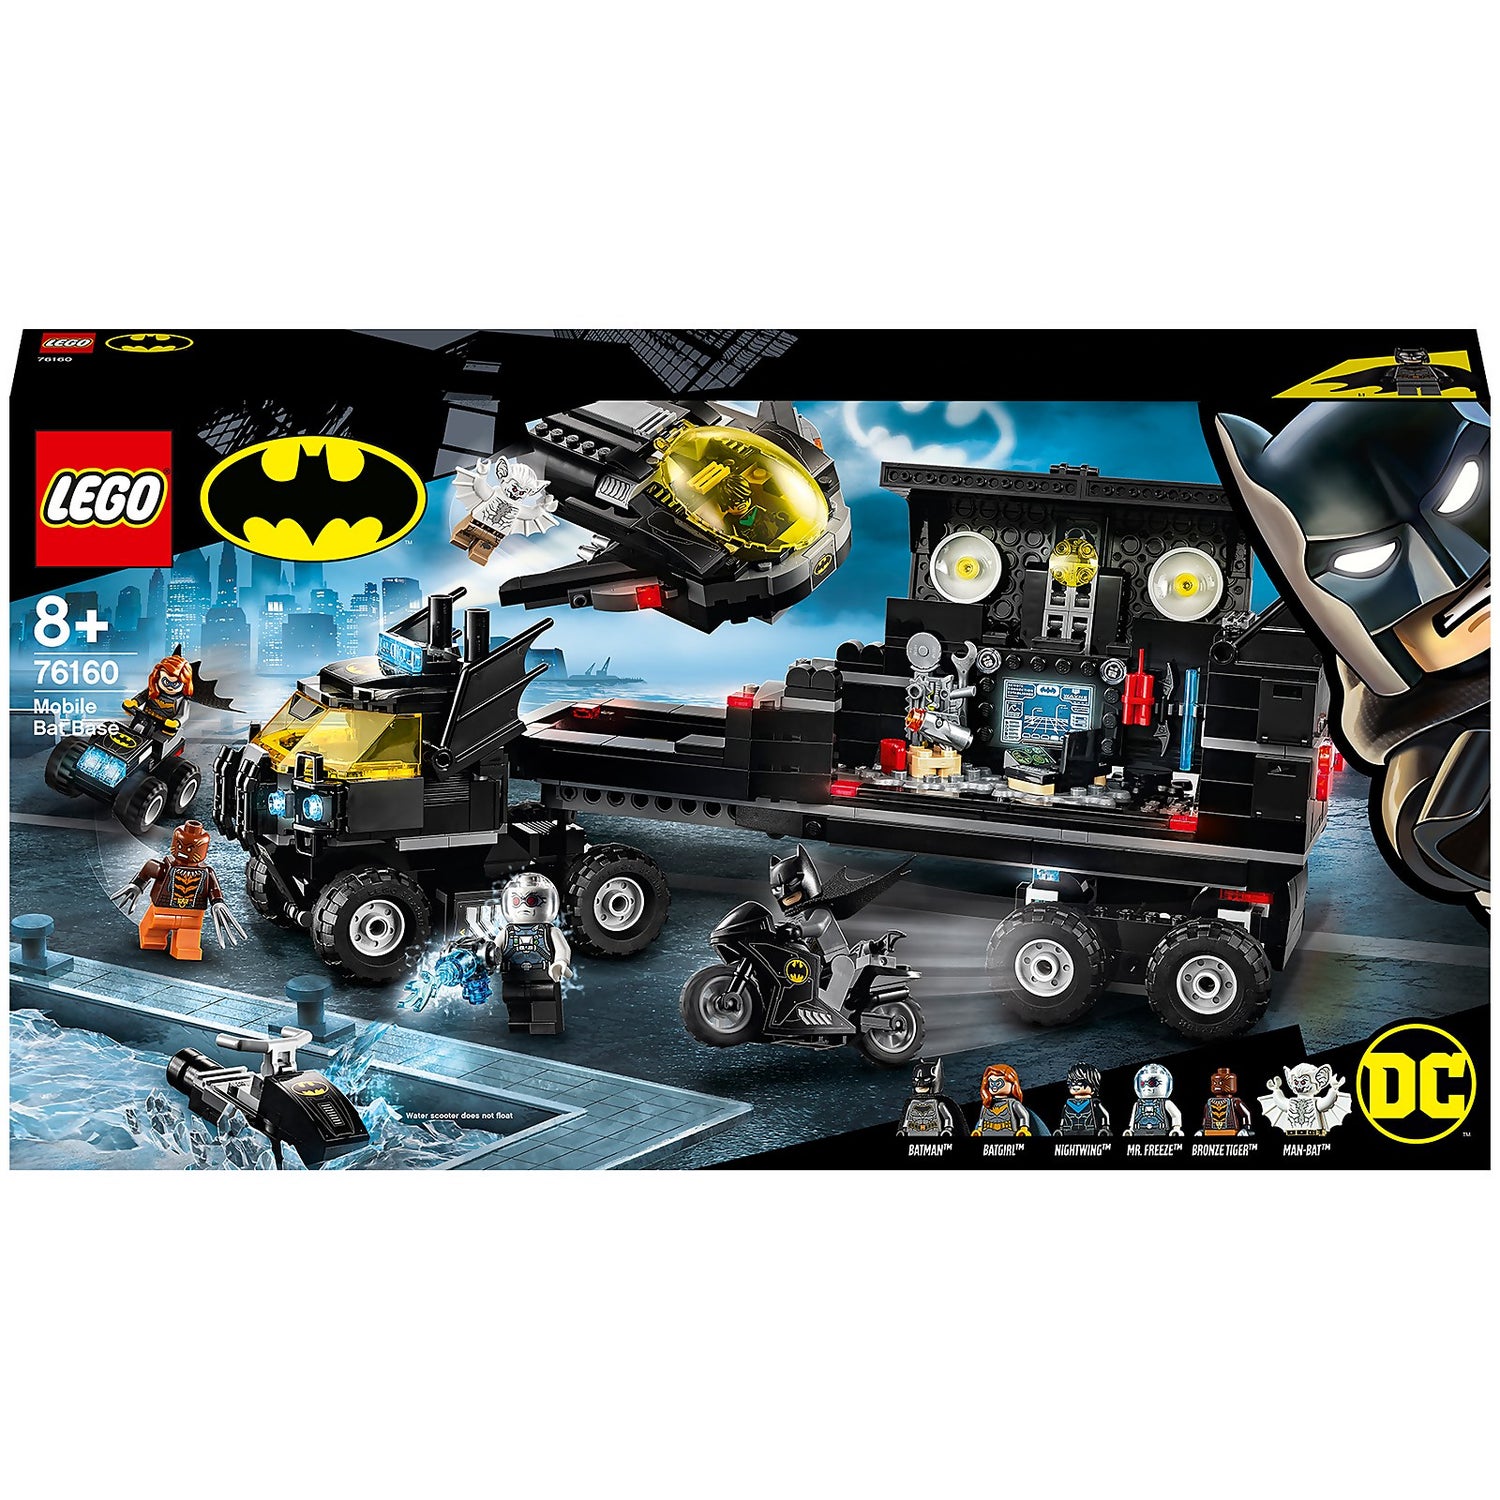 Lego Dc Batman Mobile Bat Base Batcave